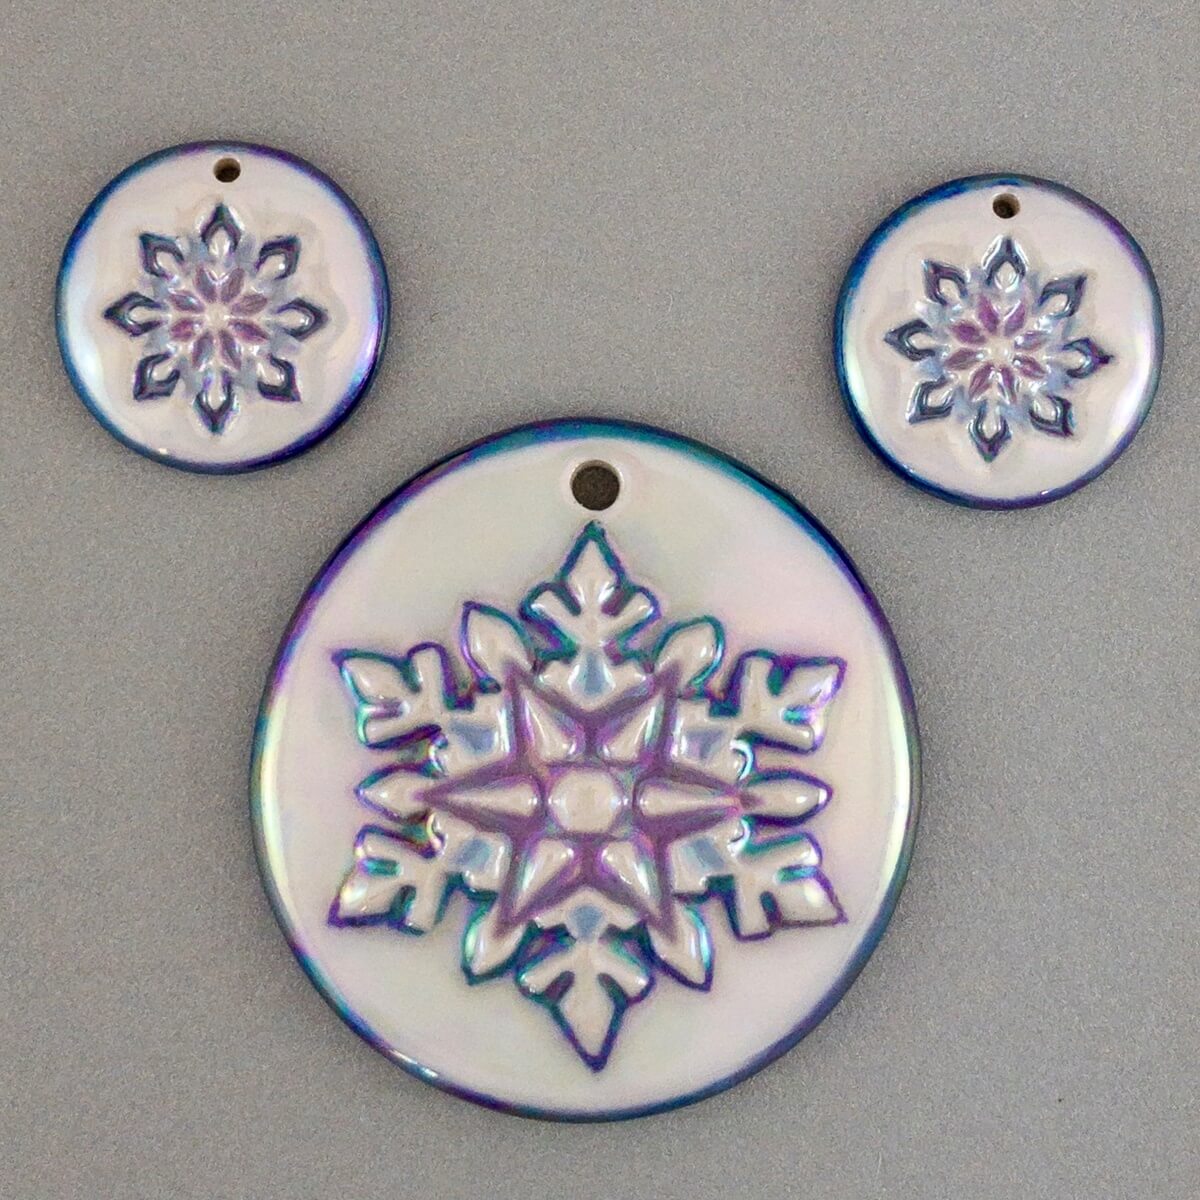 New winter 2019 snowflake pendant & earring sets.